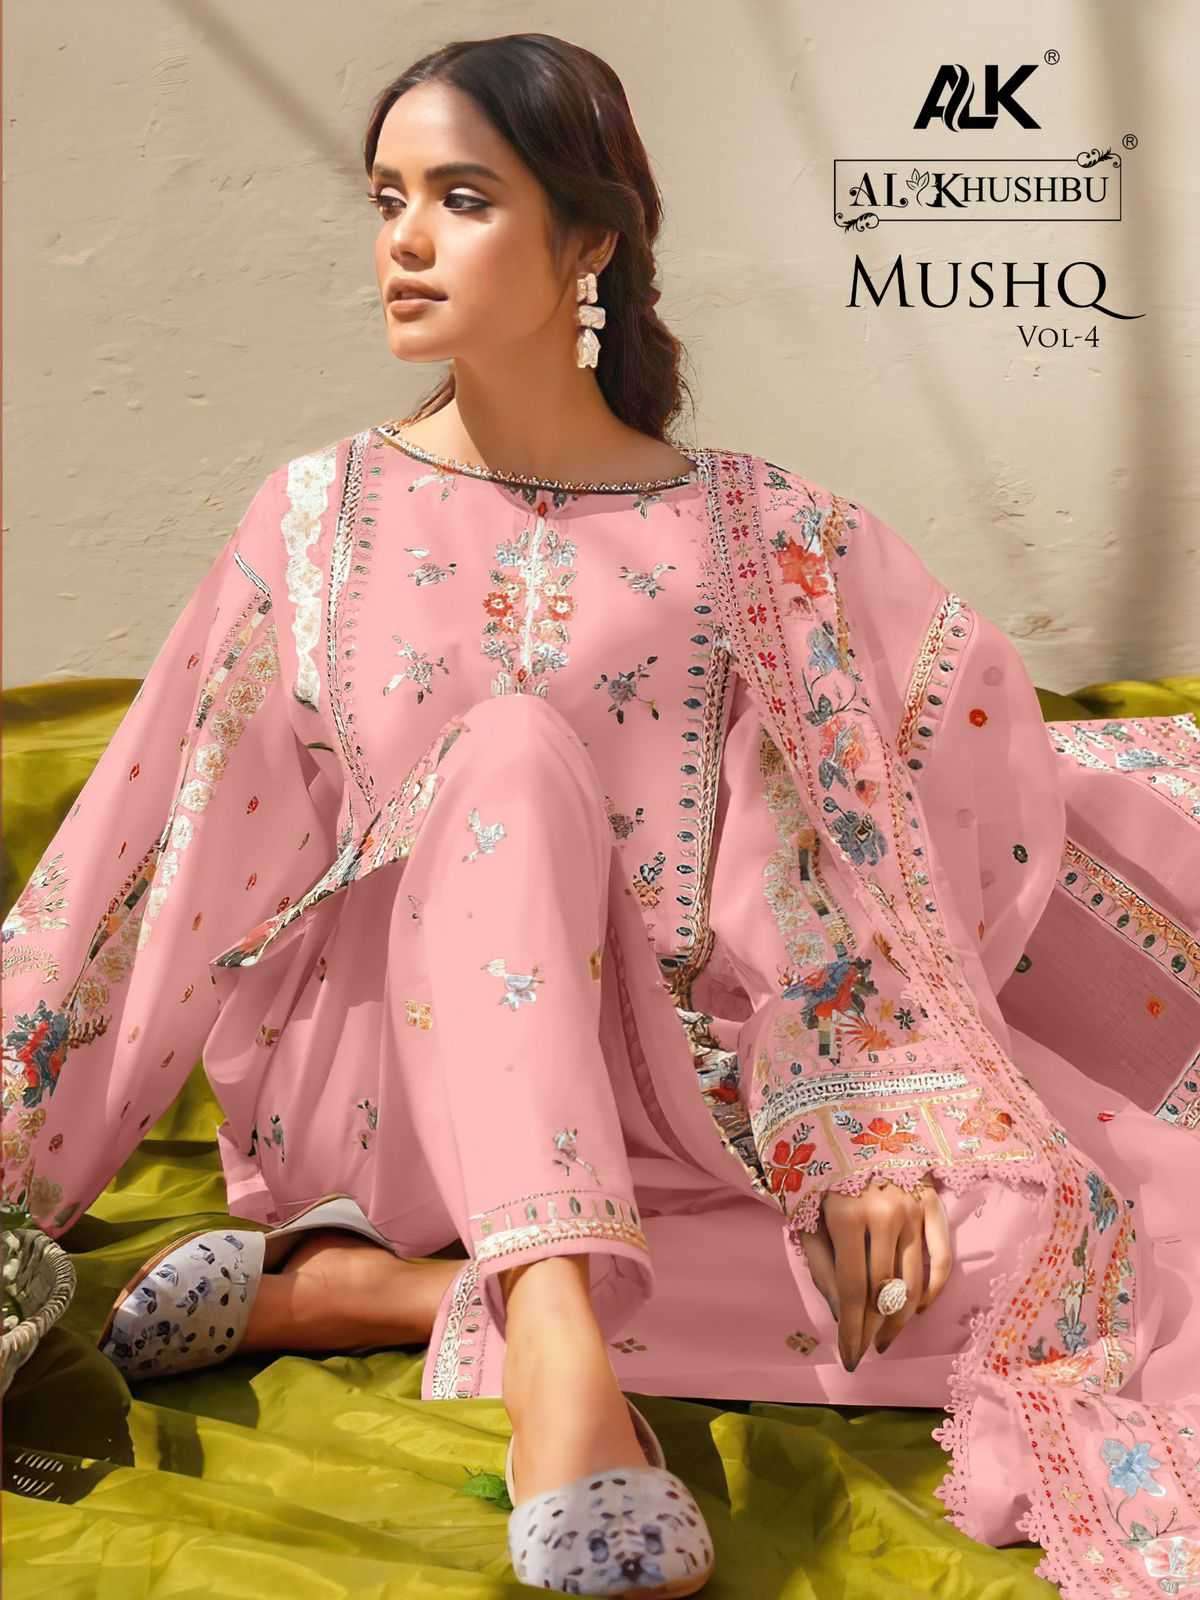 al khushbu mushq vol 4 series 5085 cambric cotton suit 